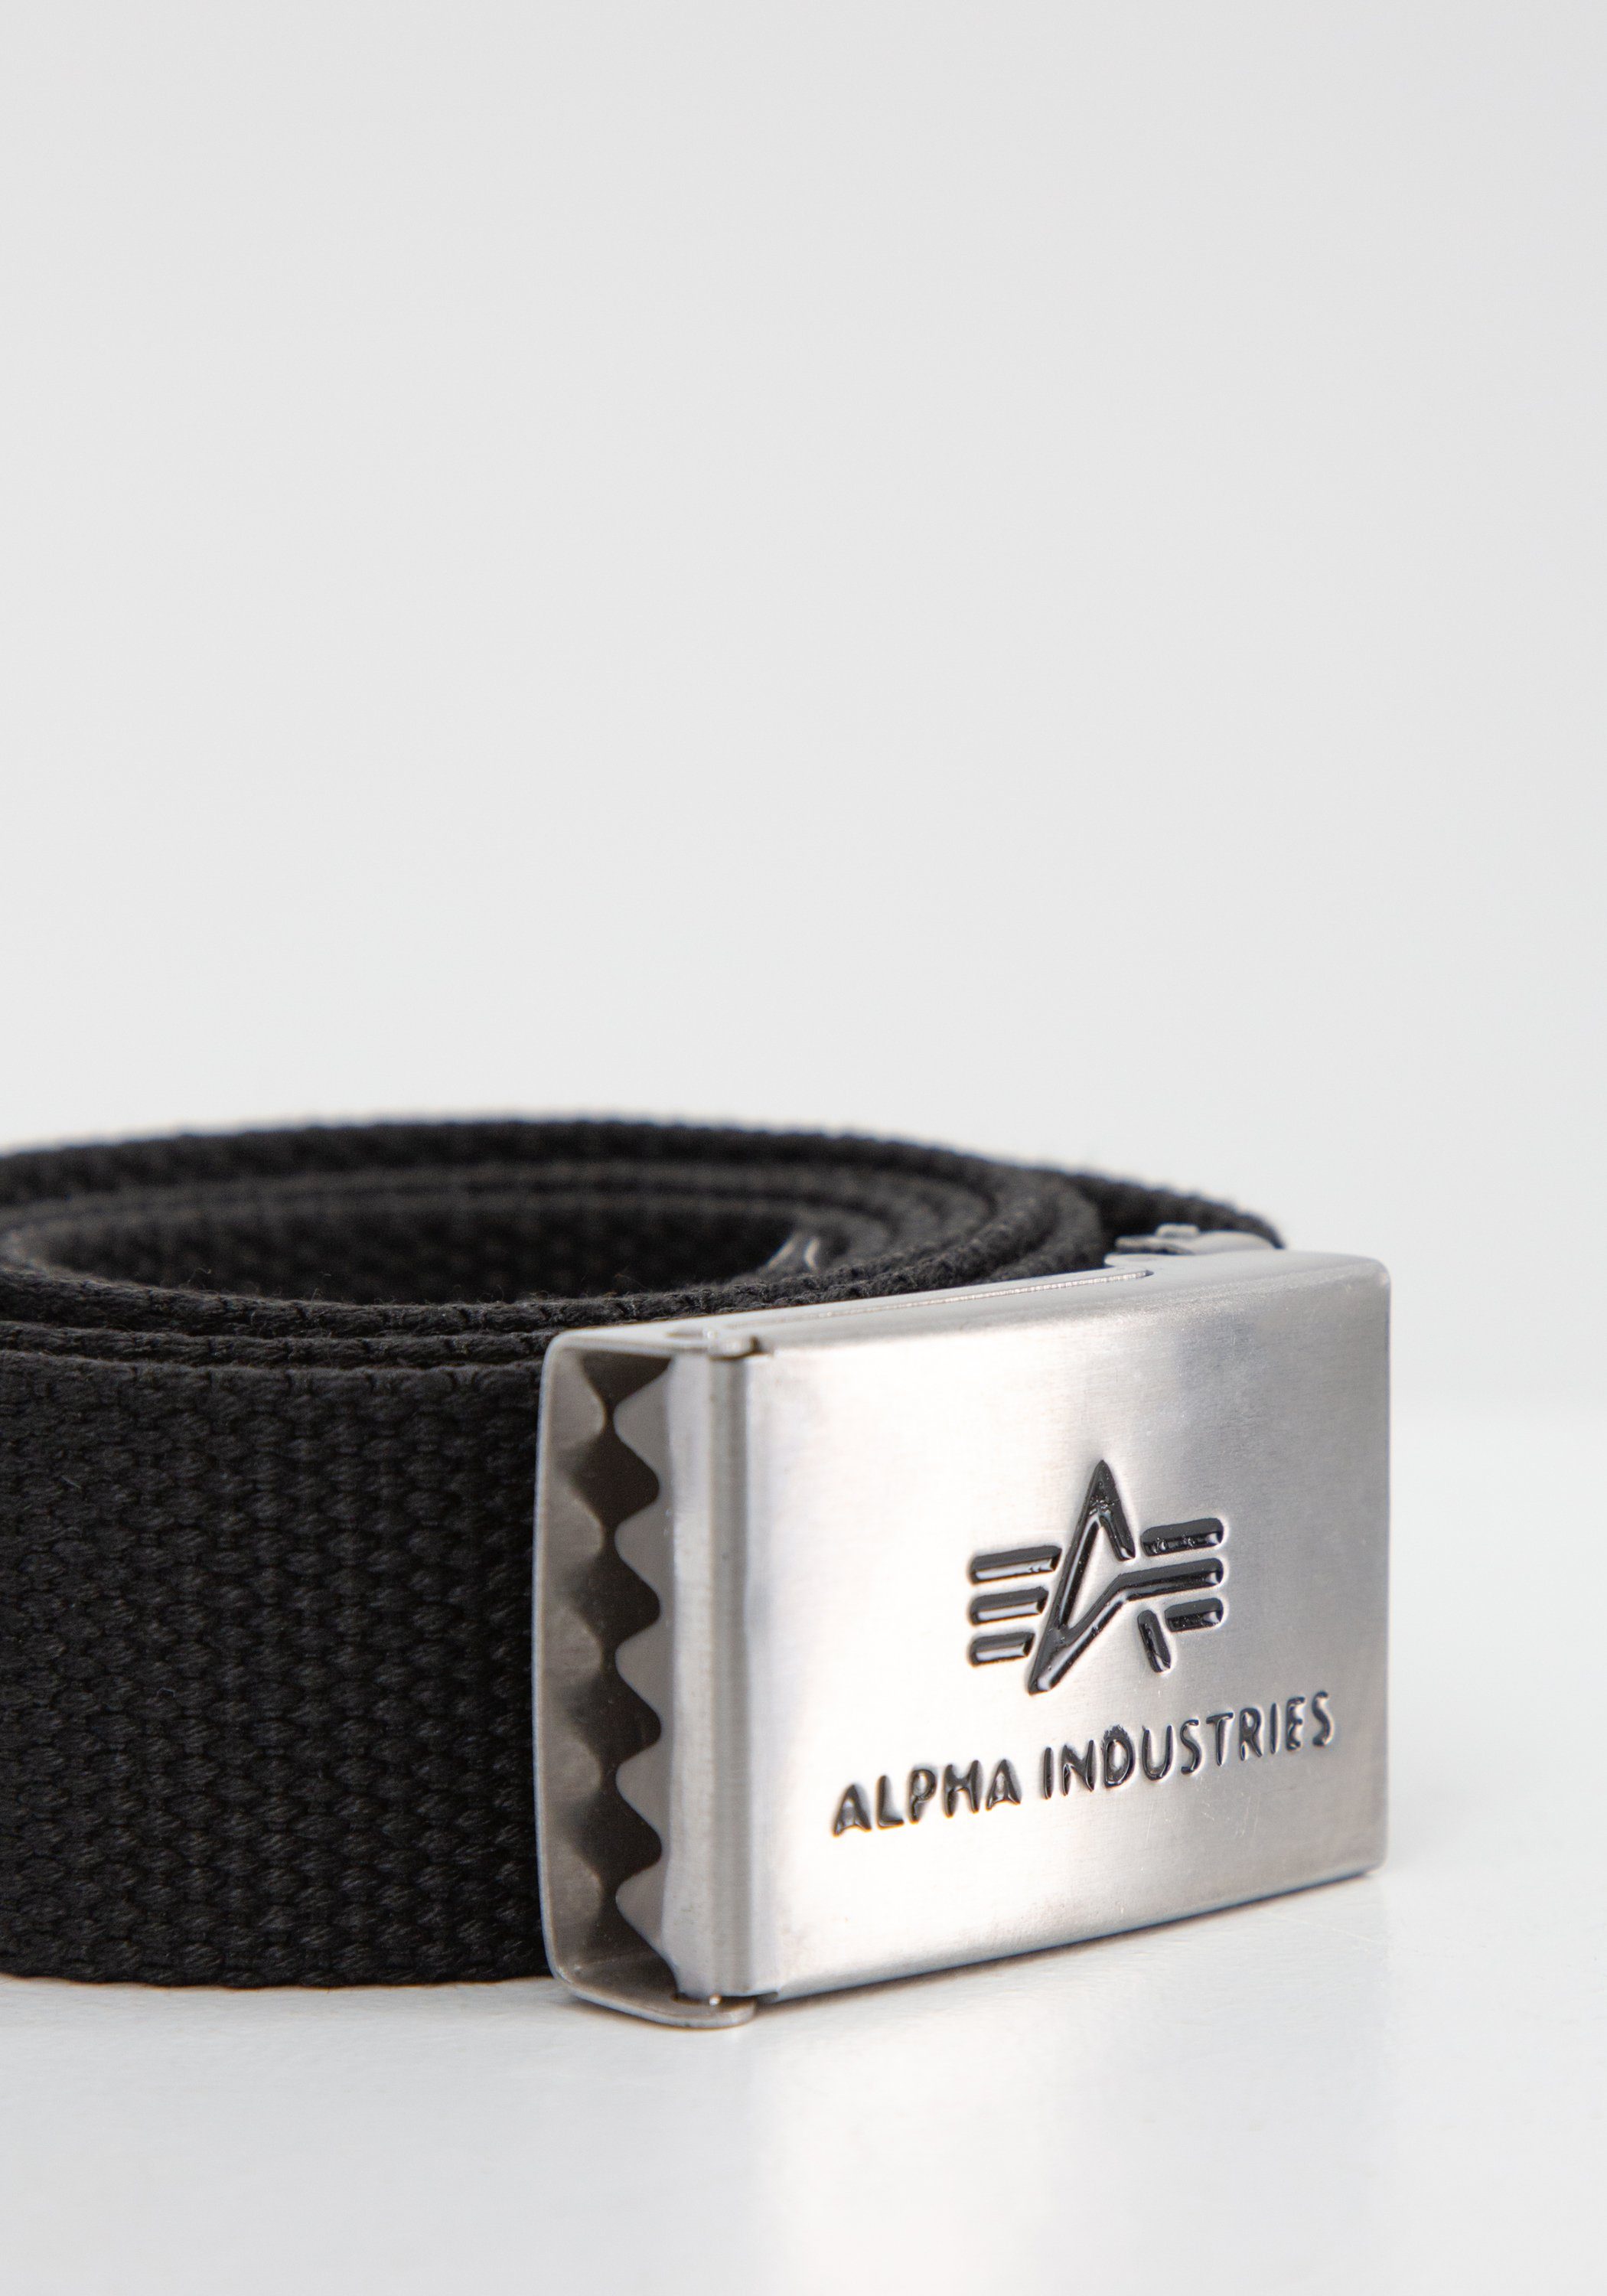 Industries A Big Belts Ledergürtel Industries Belt Alpha Accessoires - Alpha